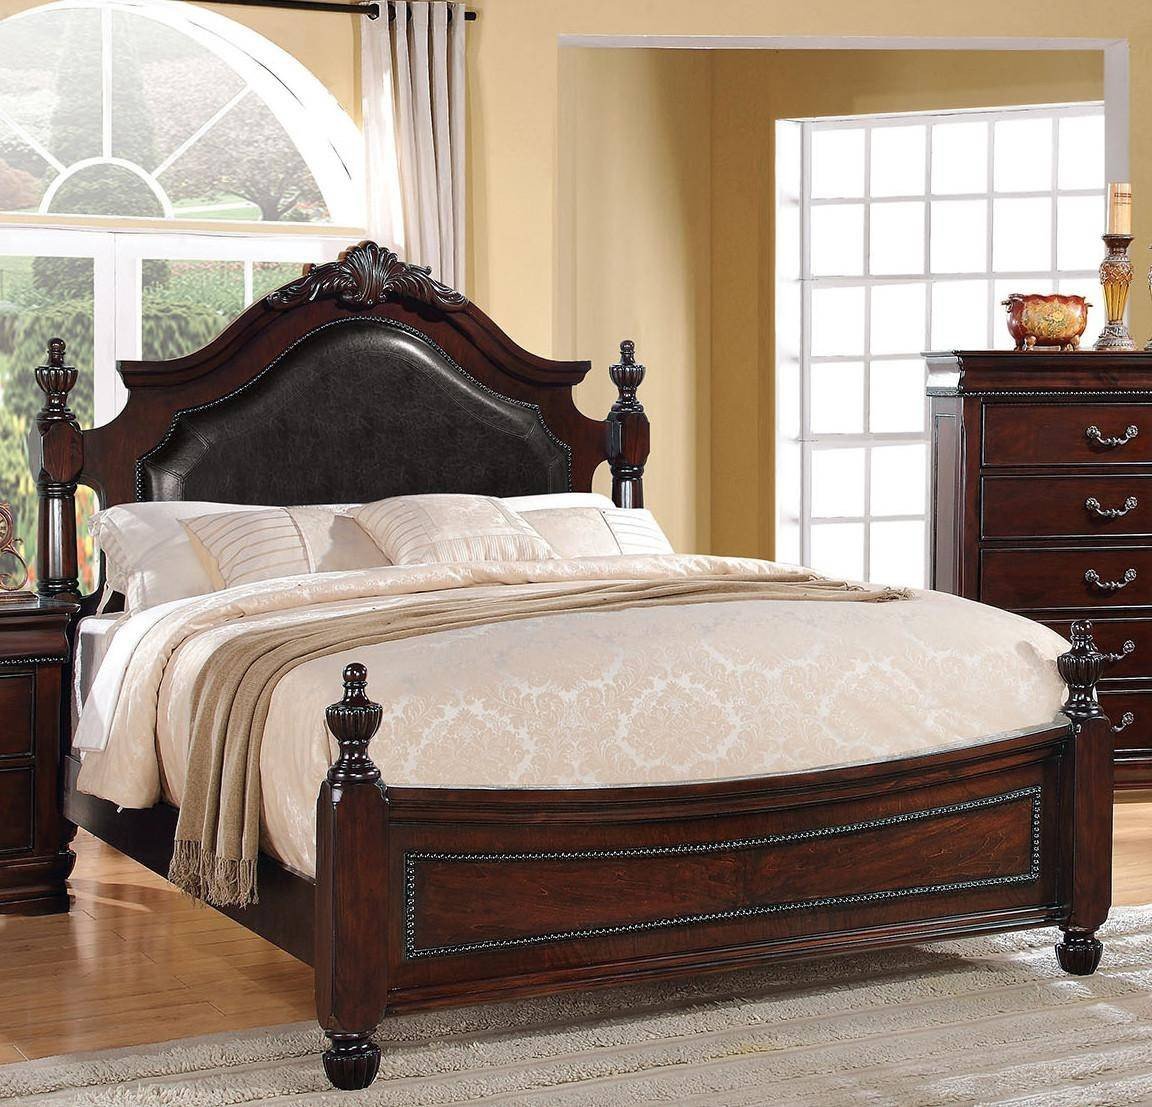 Grand Furniture Bedroom Set Beautiful Black Cherry Upholstered Poster King Bed Set 5pcs Acme